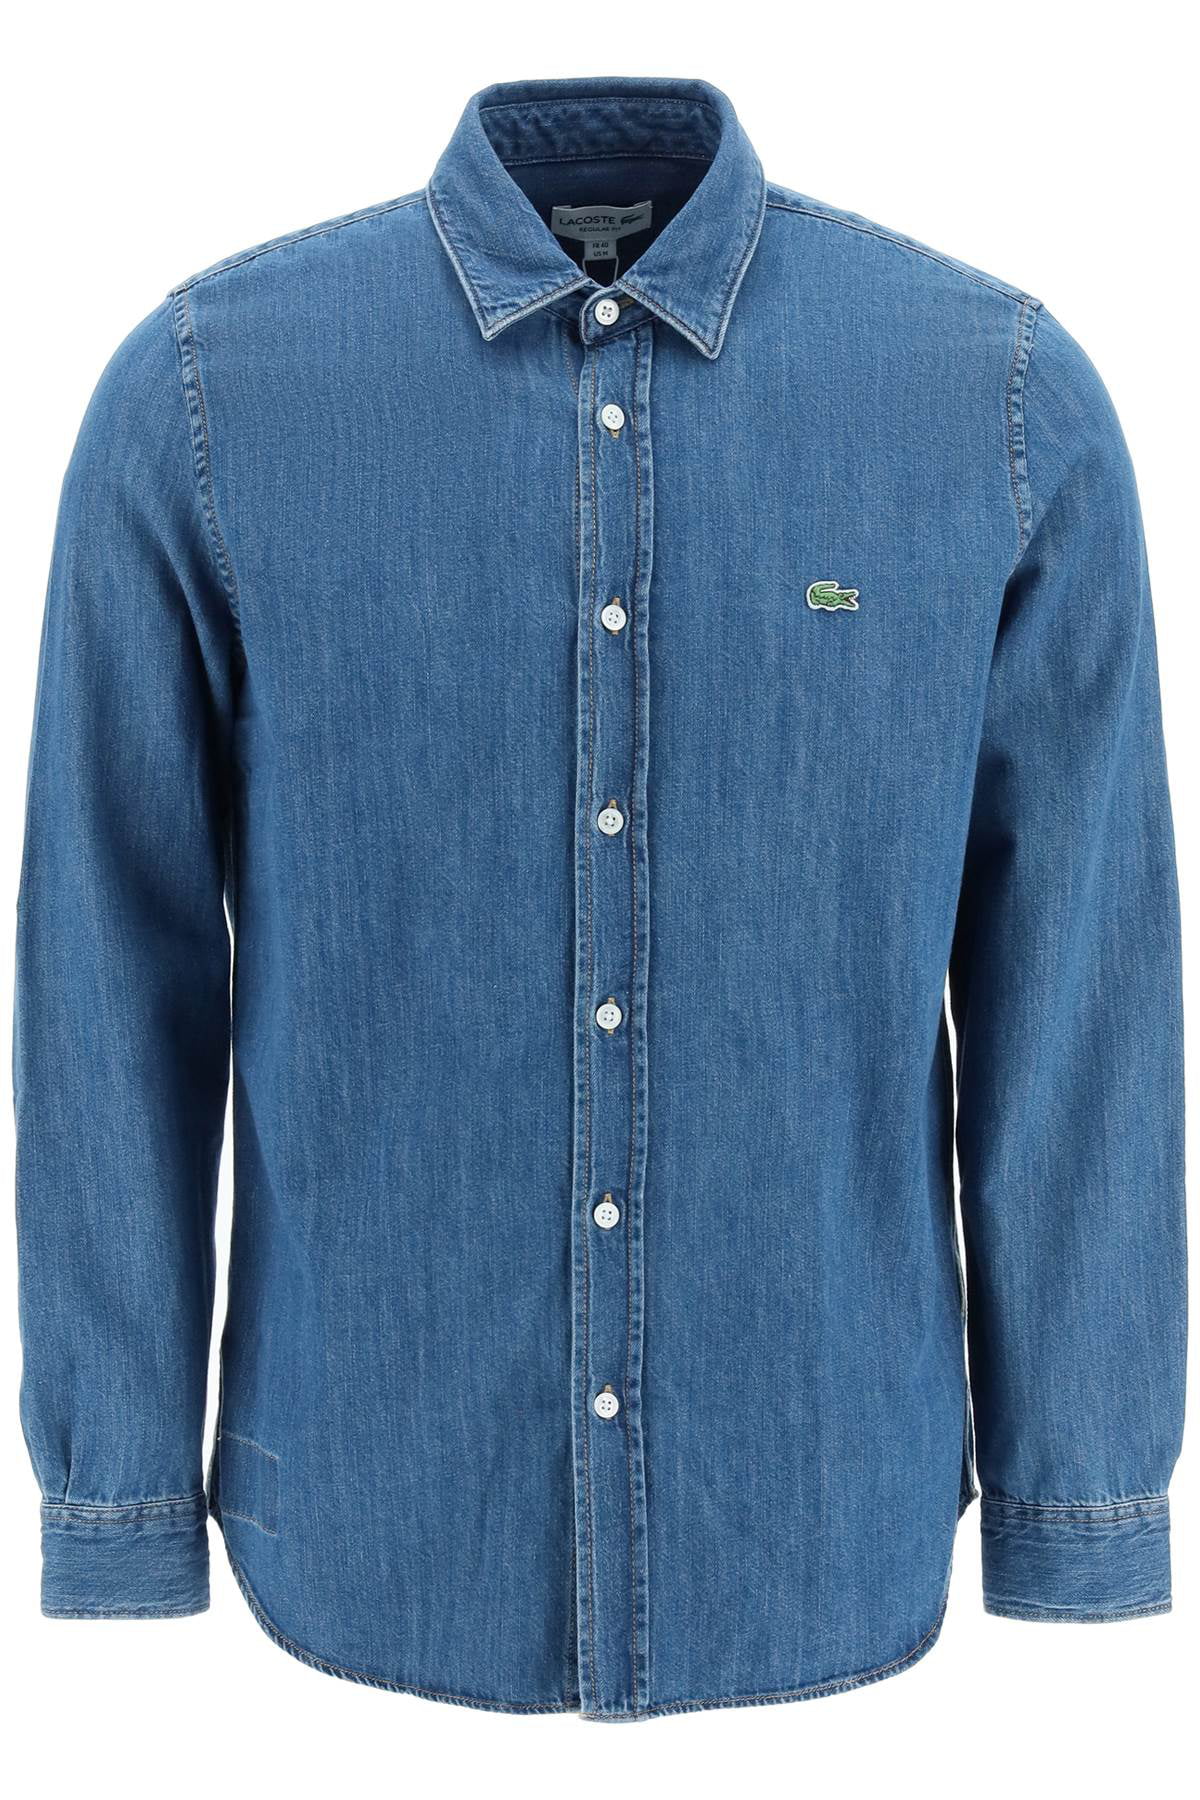 Lacoste regular fit shirt in organic denim - Walmart.com